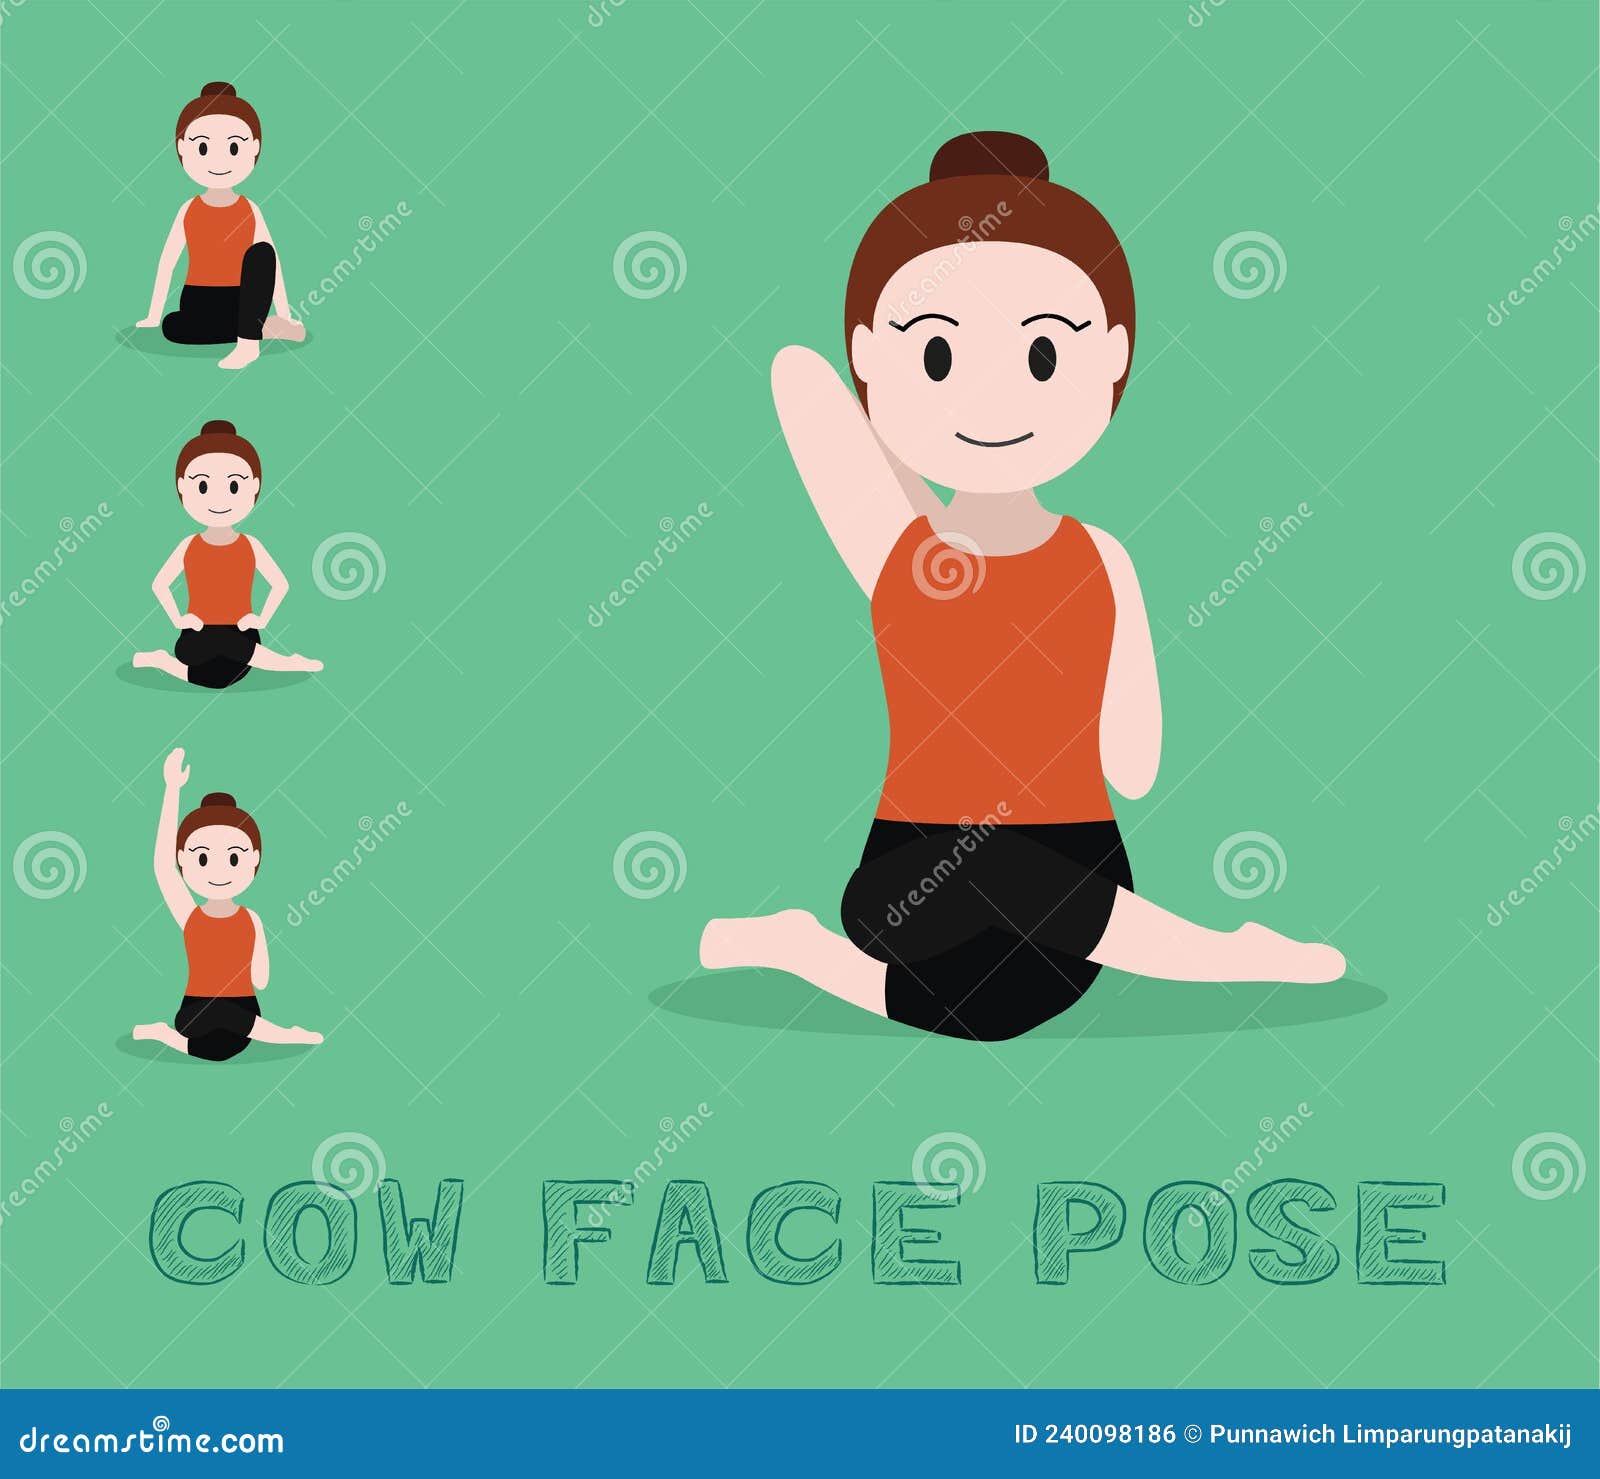 Cow face pose modifications yoga asanas set Vector Image